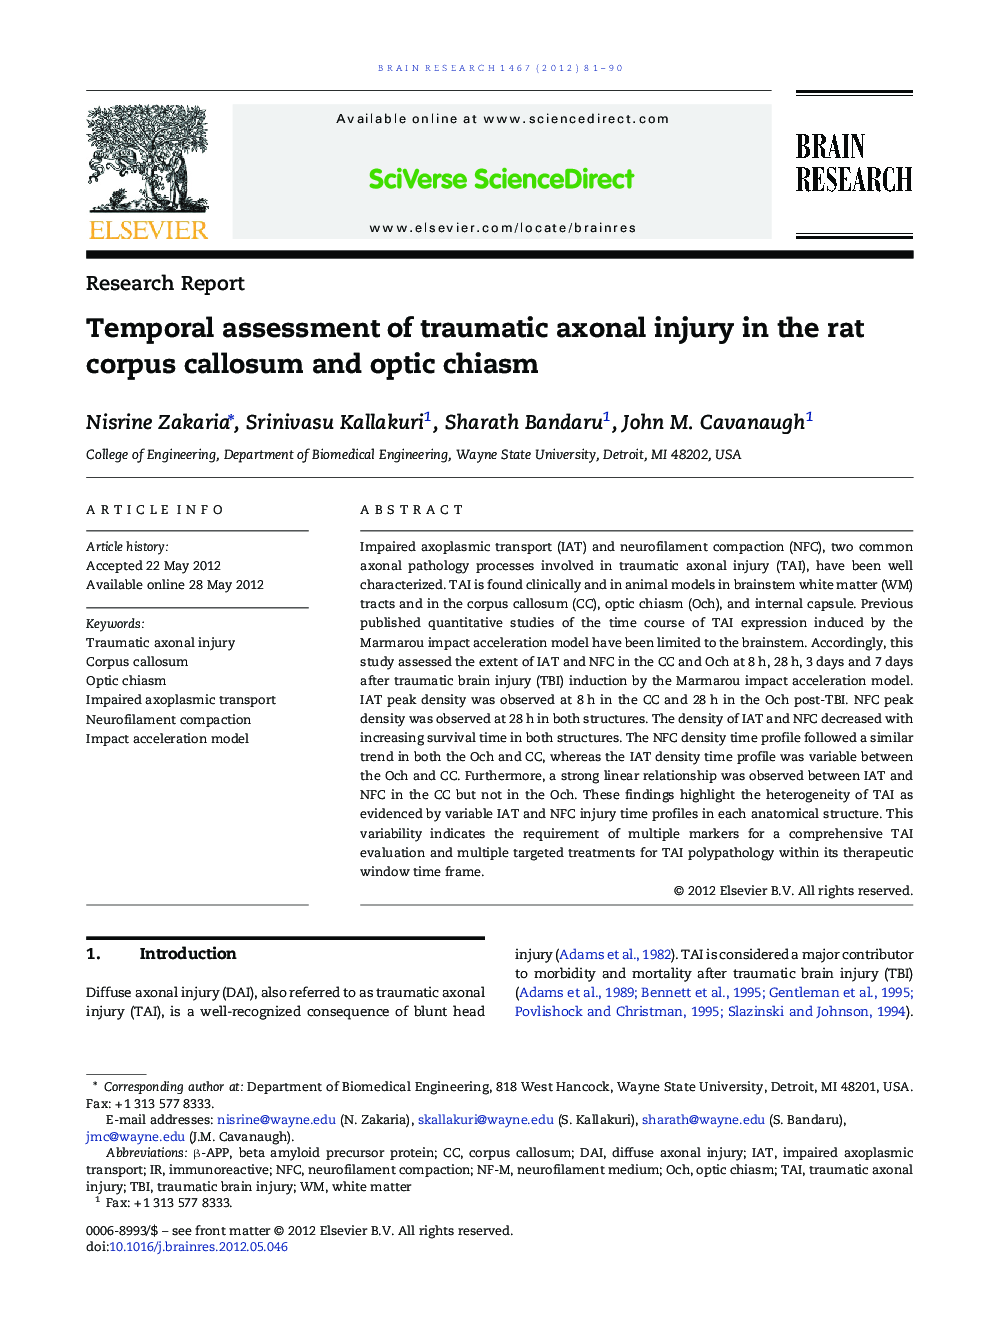 Temporal assessment of traumatic axonal injury in the rat corpus callosum and optic chiasm